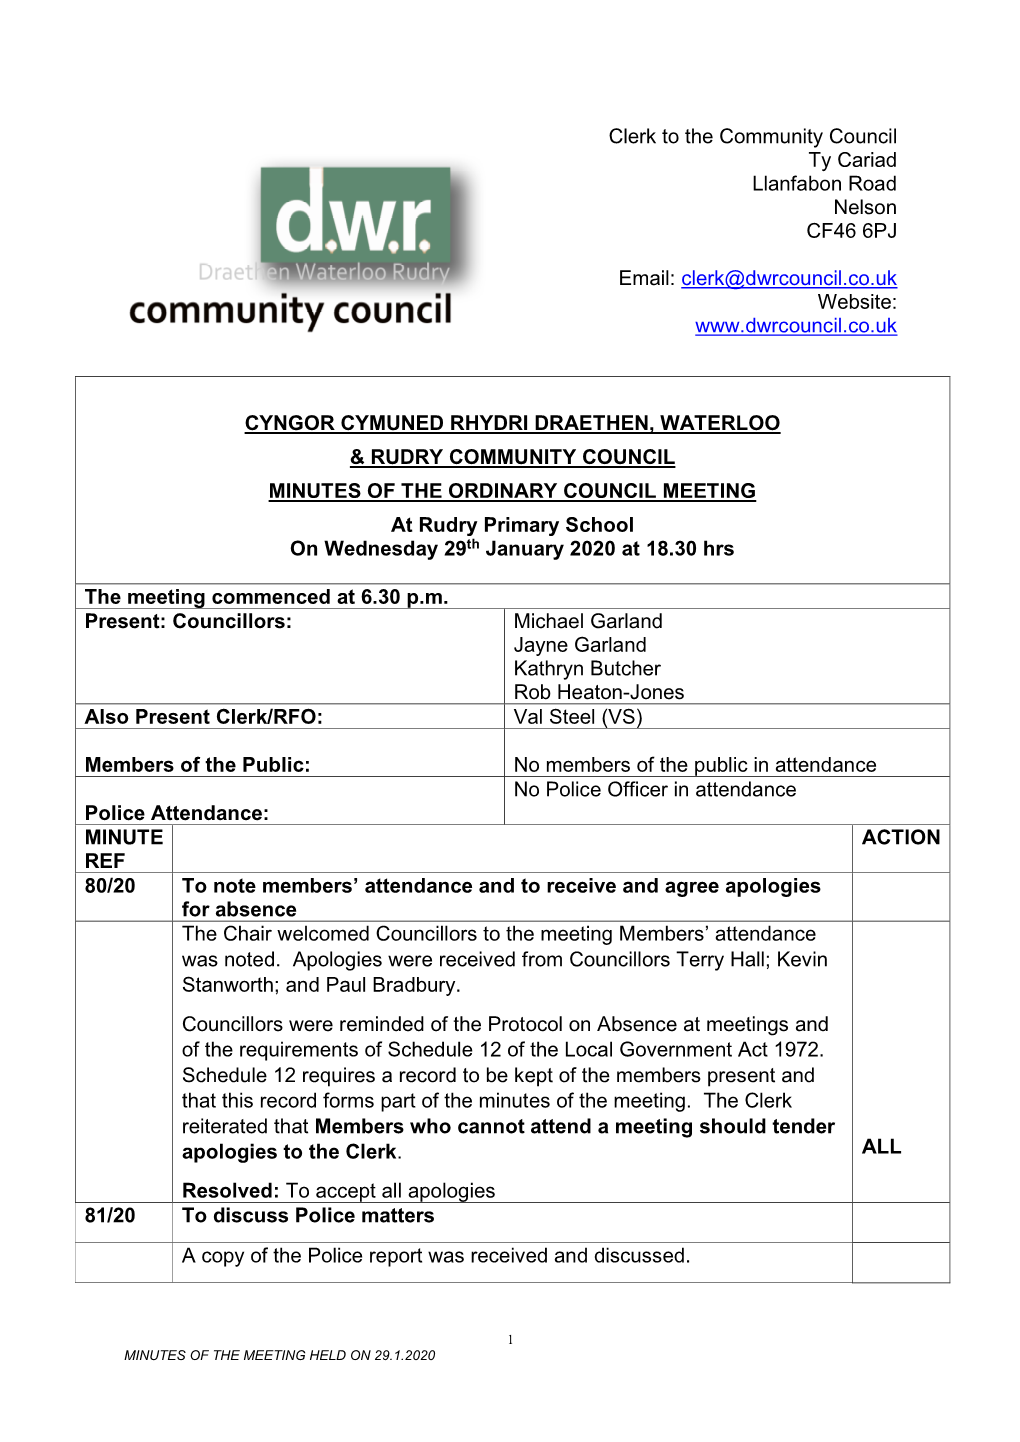 Clerk to the Community Council Ty Cariad Llanfabon Road Nelson CF46 6PJ